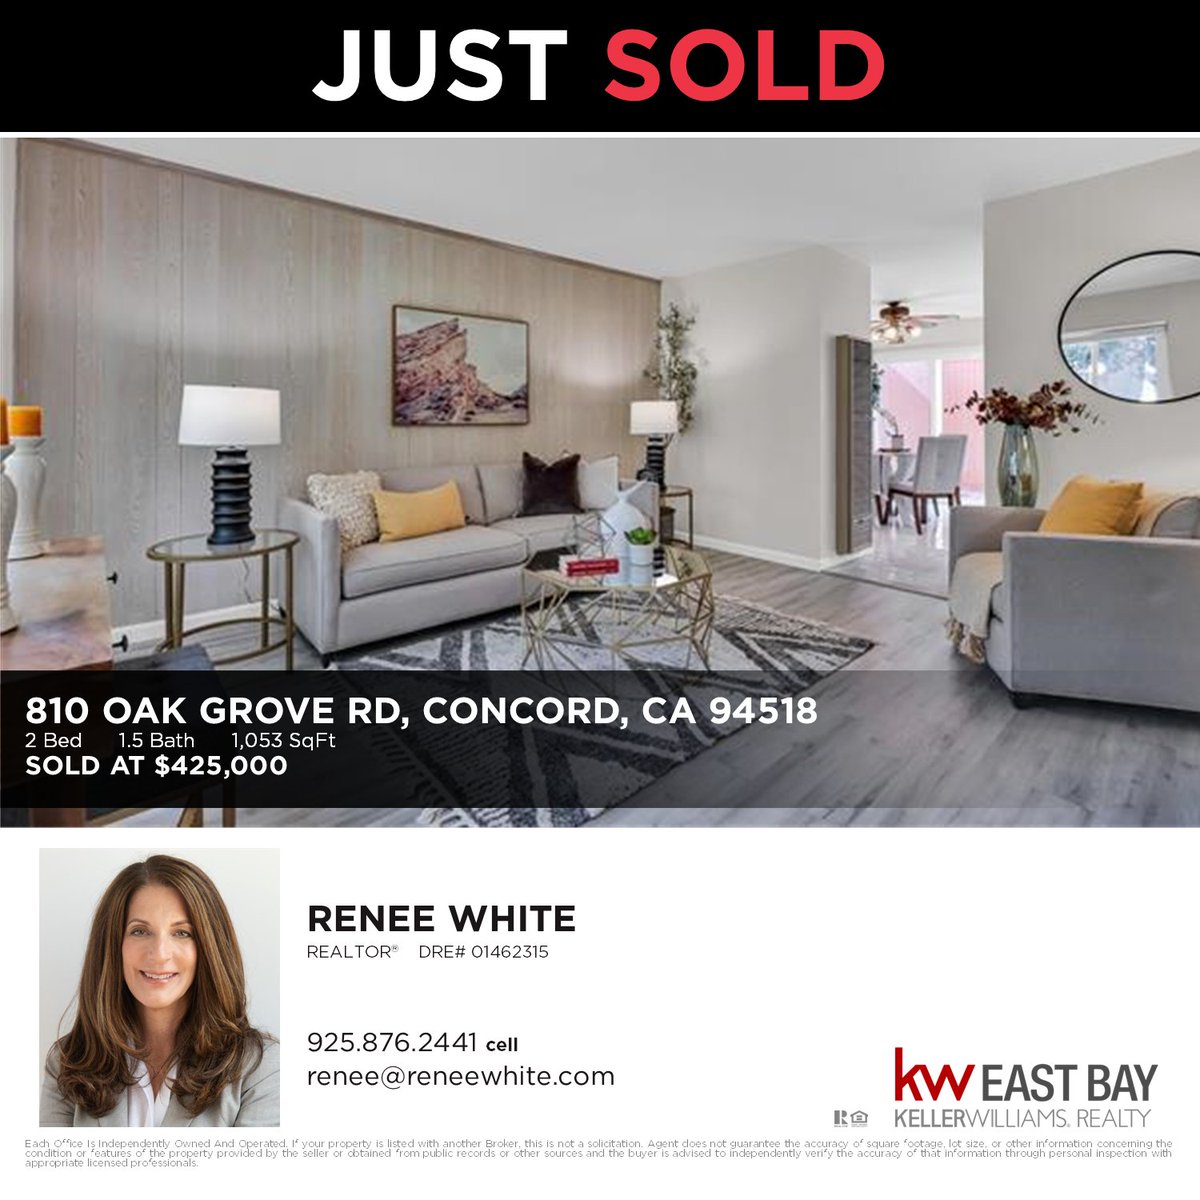 Just sold by Renee White, 810 Oak Grove Rd
#kellerwilliams #bayarearealestate #bayarearealtor